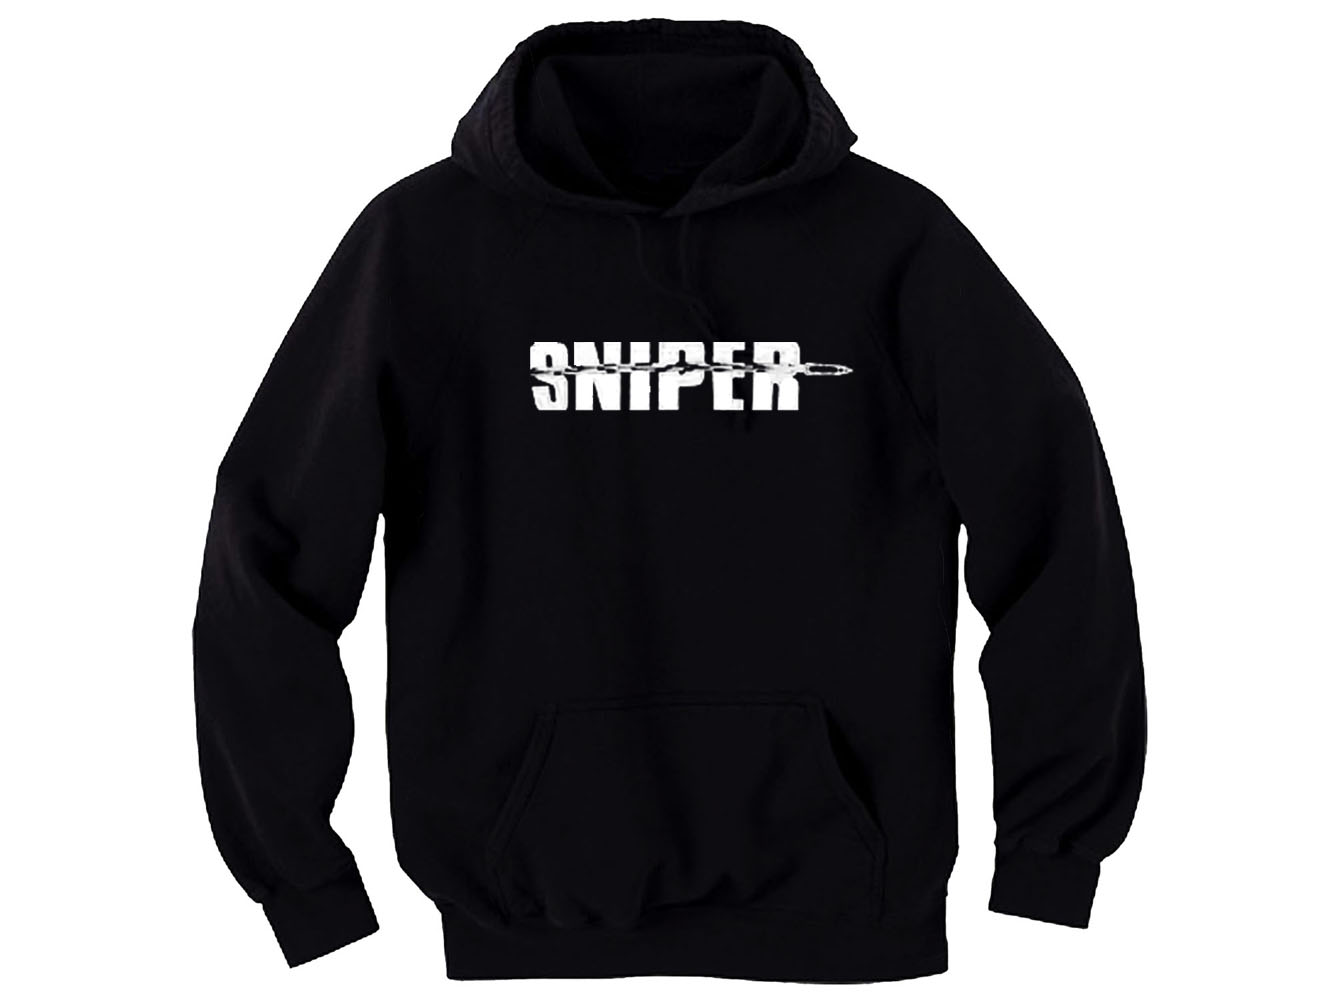 Sniper shooting hooded sweatshirt